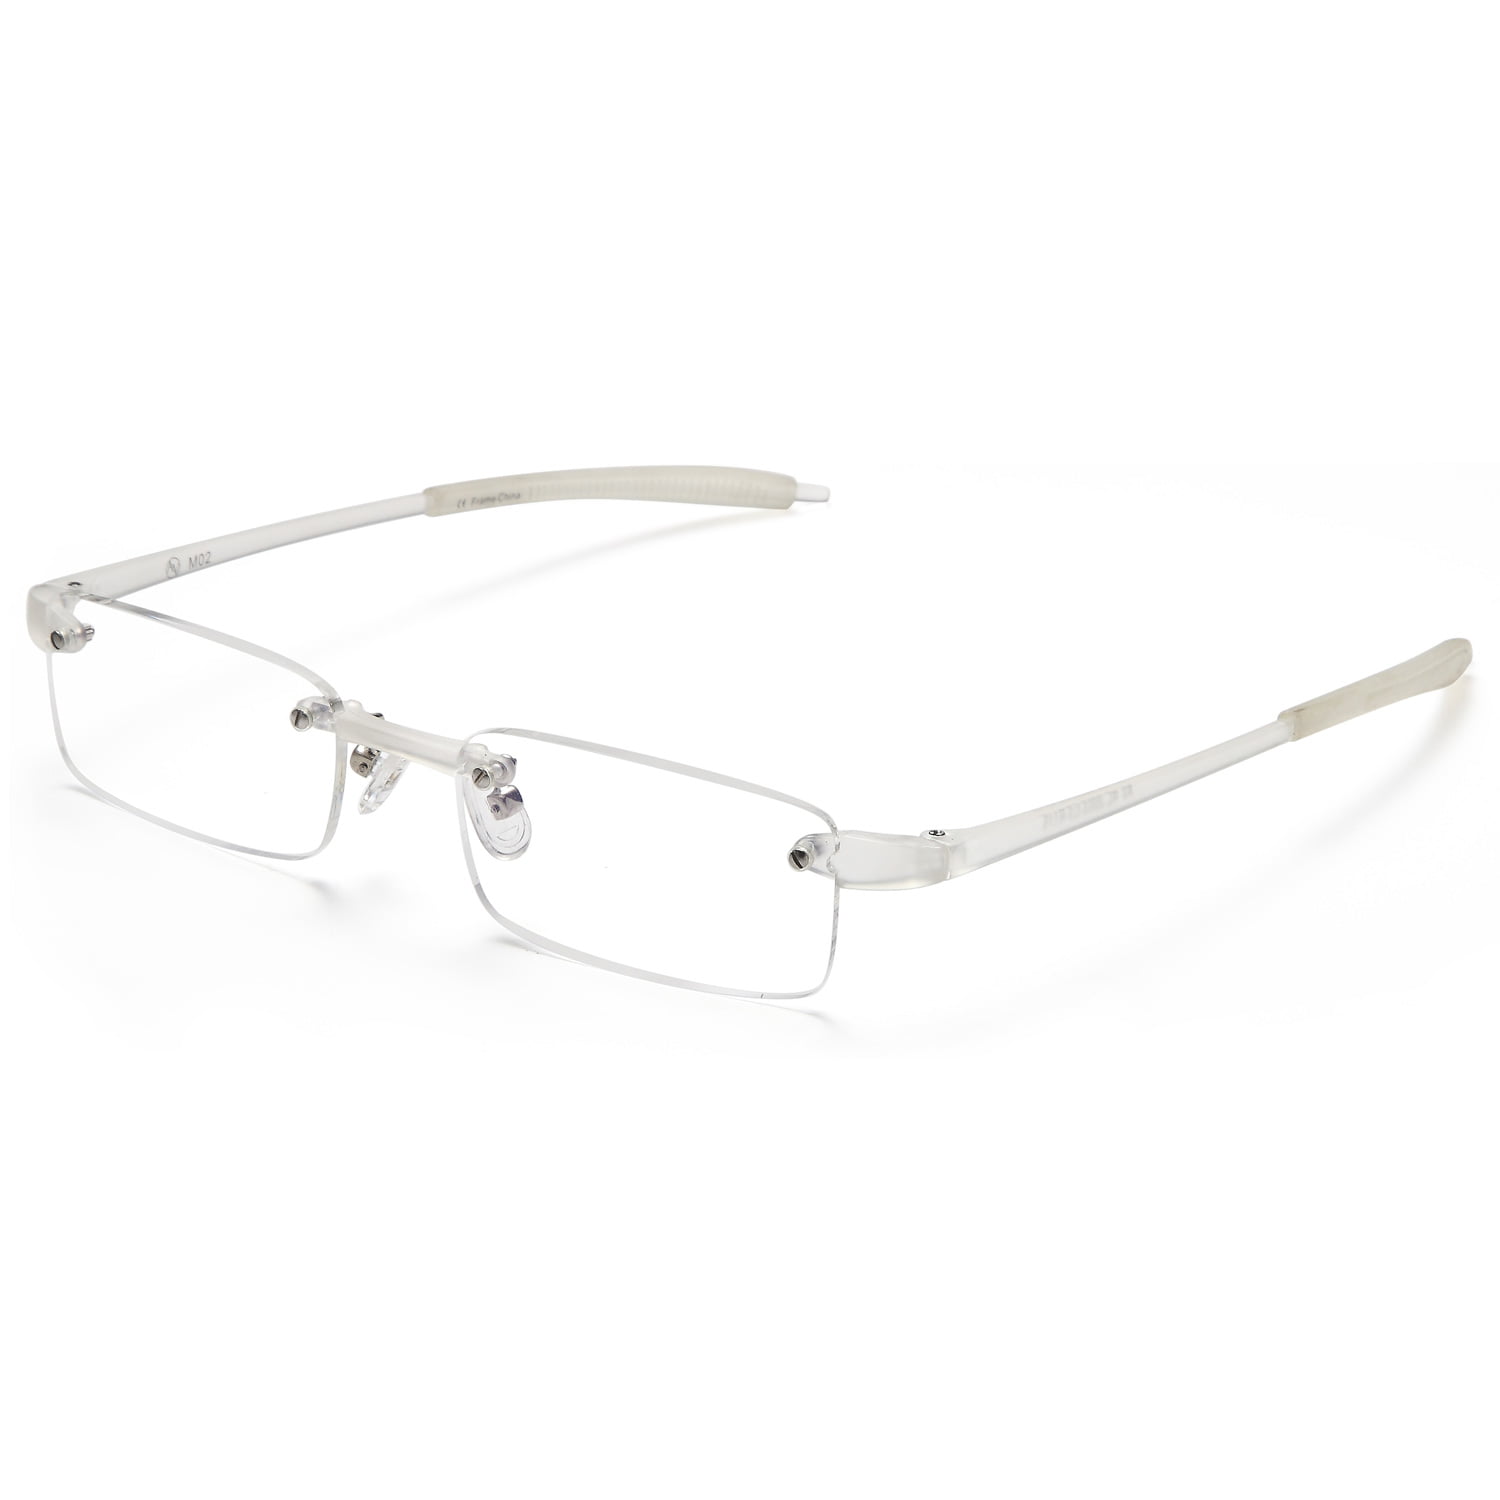 Altec Vision Best Rimless Readers Super Lightweight Reading Glasses For Men And Women 150x